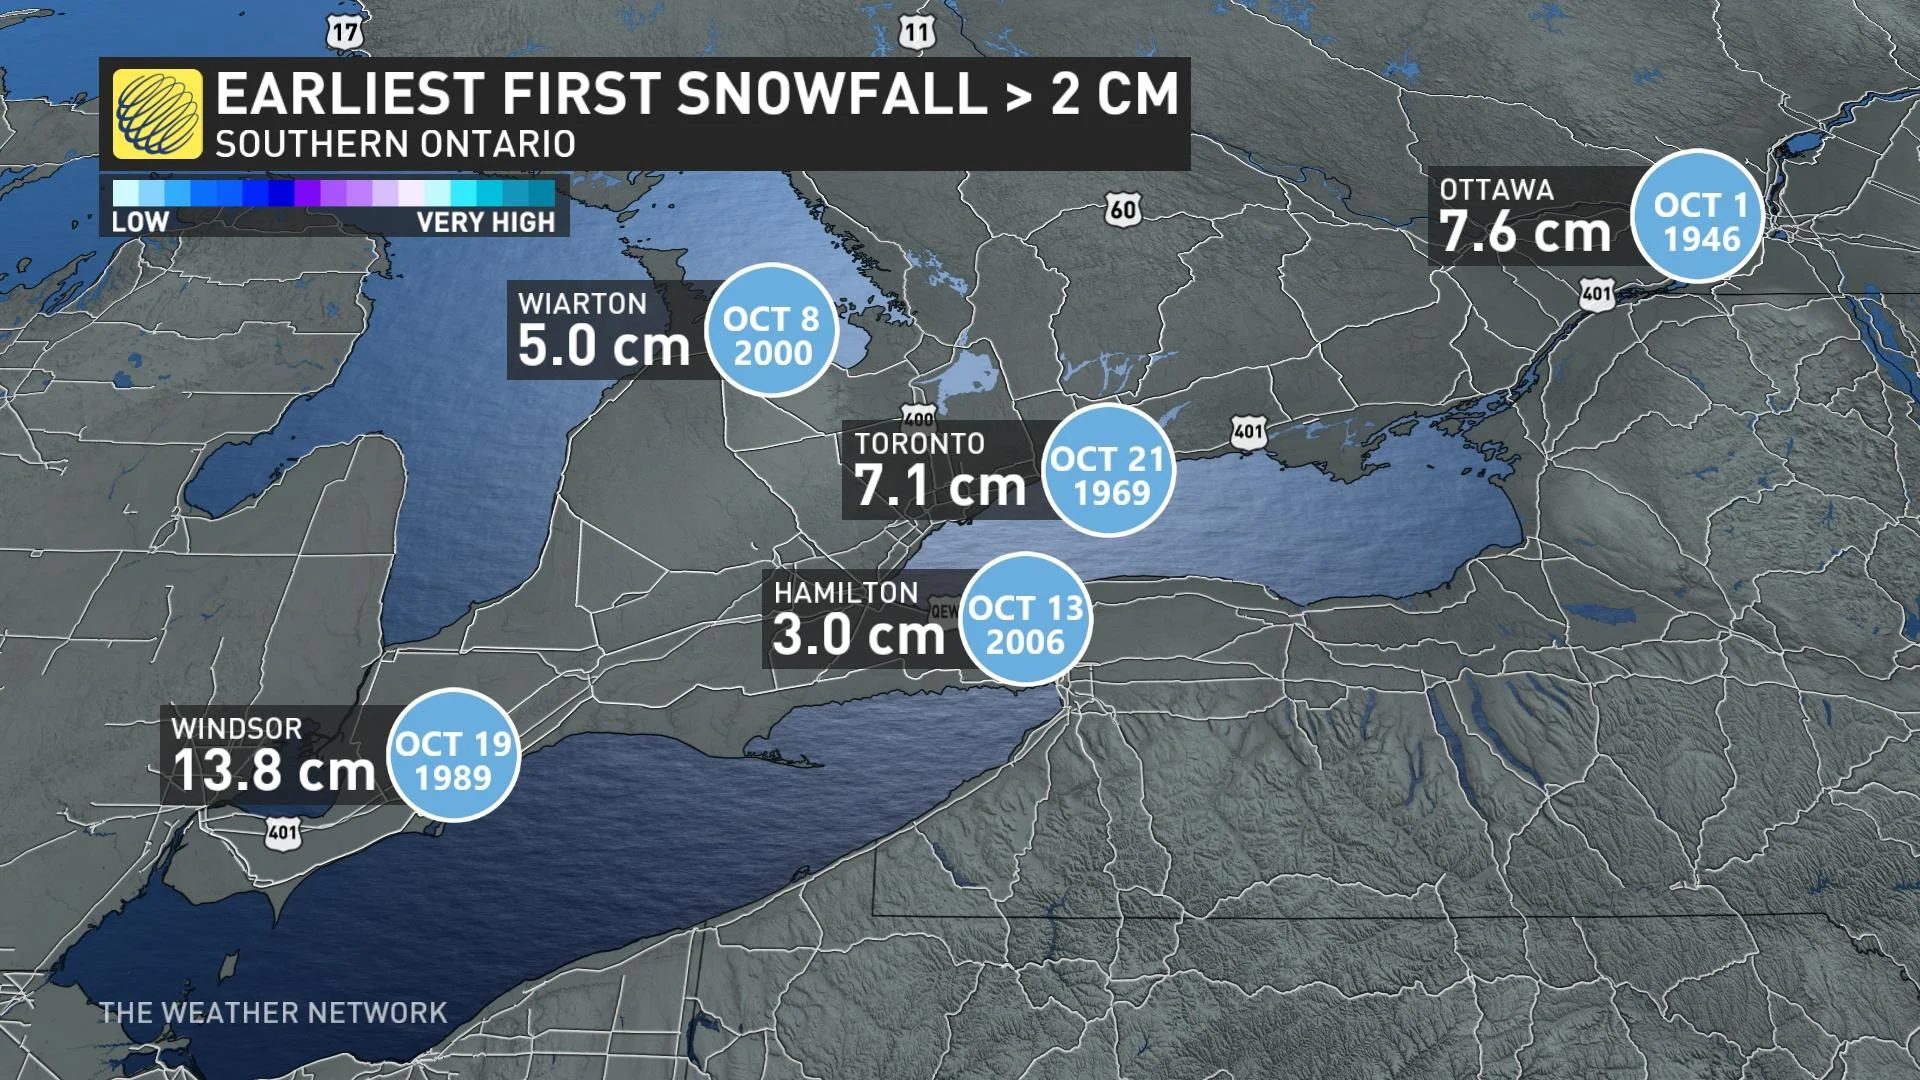 Southern Ontario earliest snowfalls on record